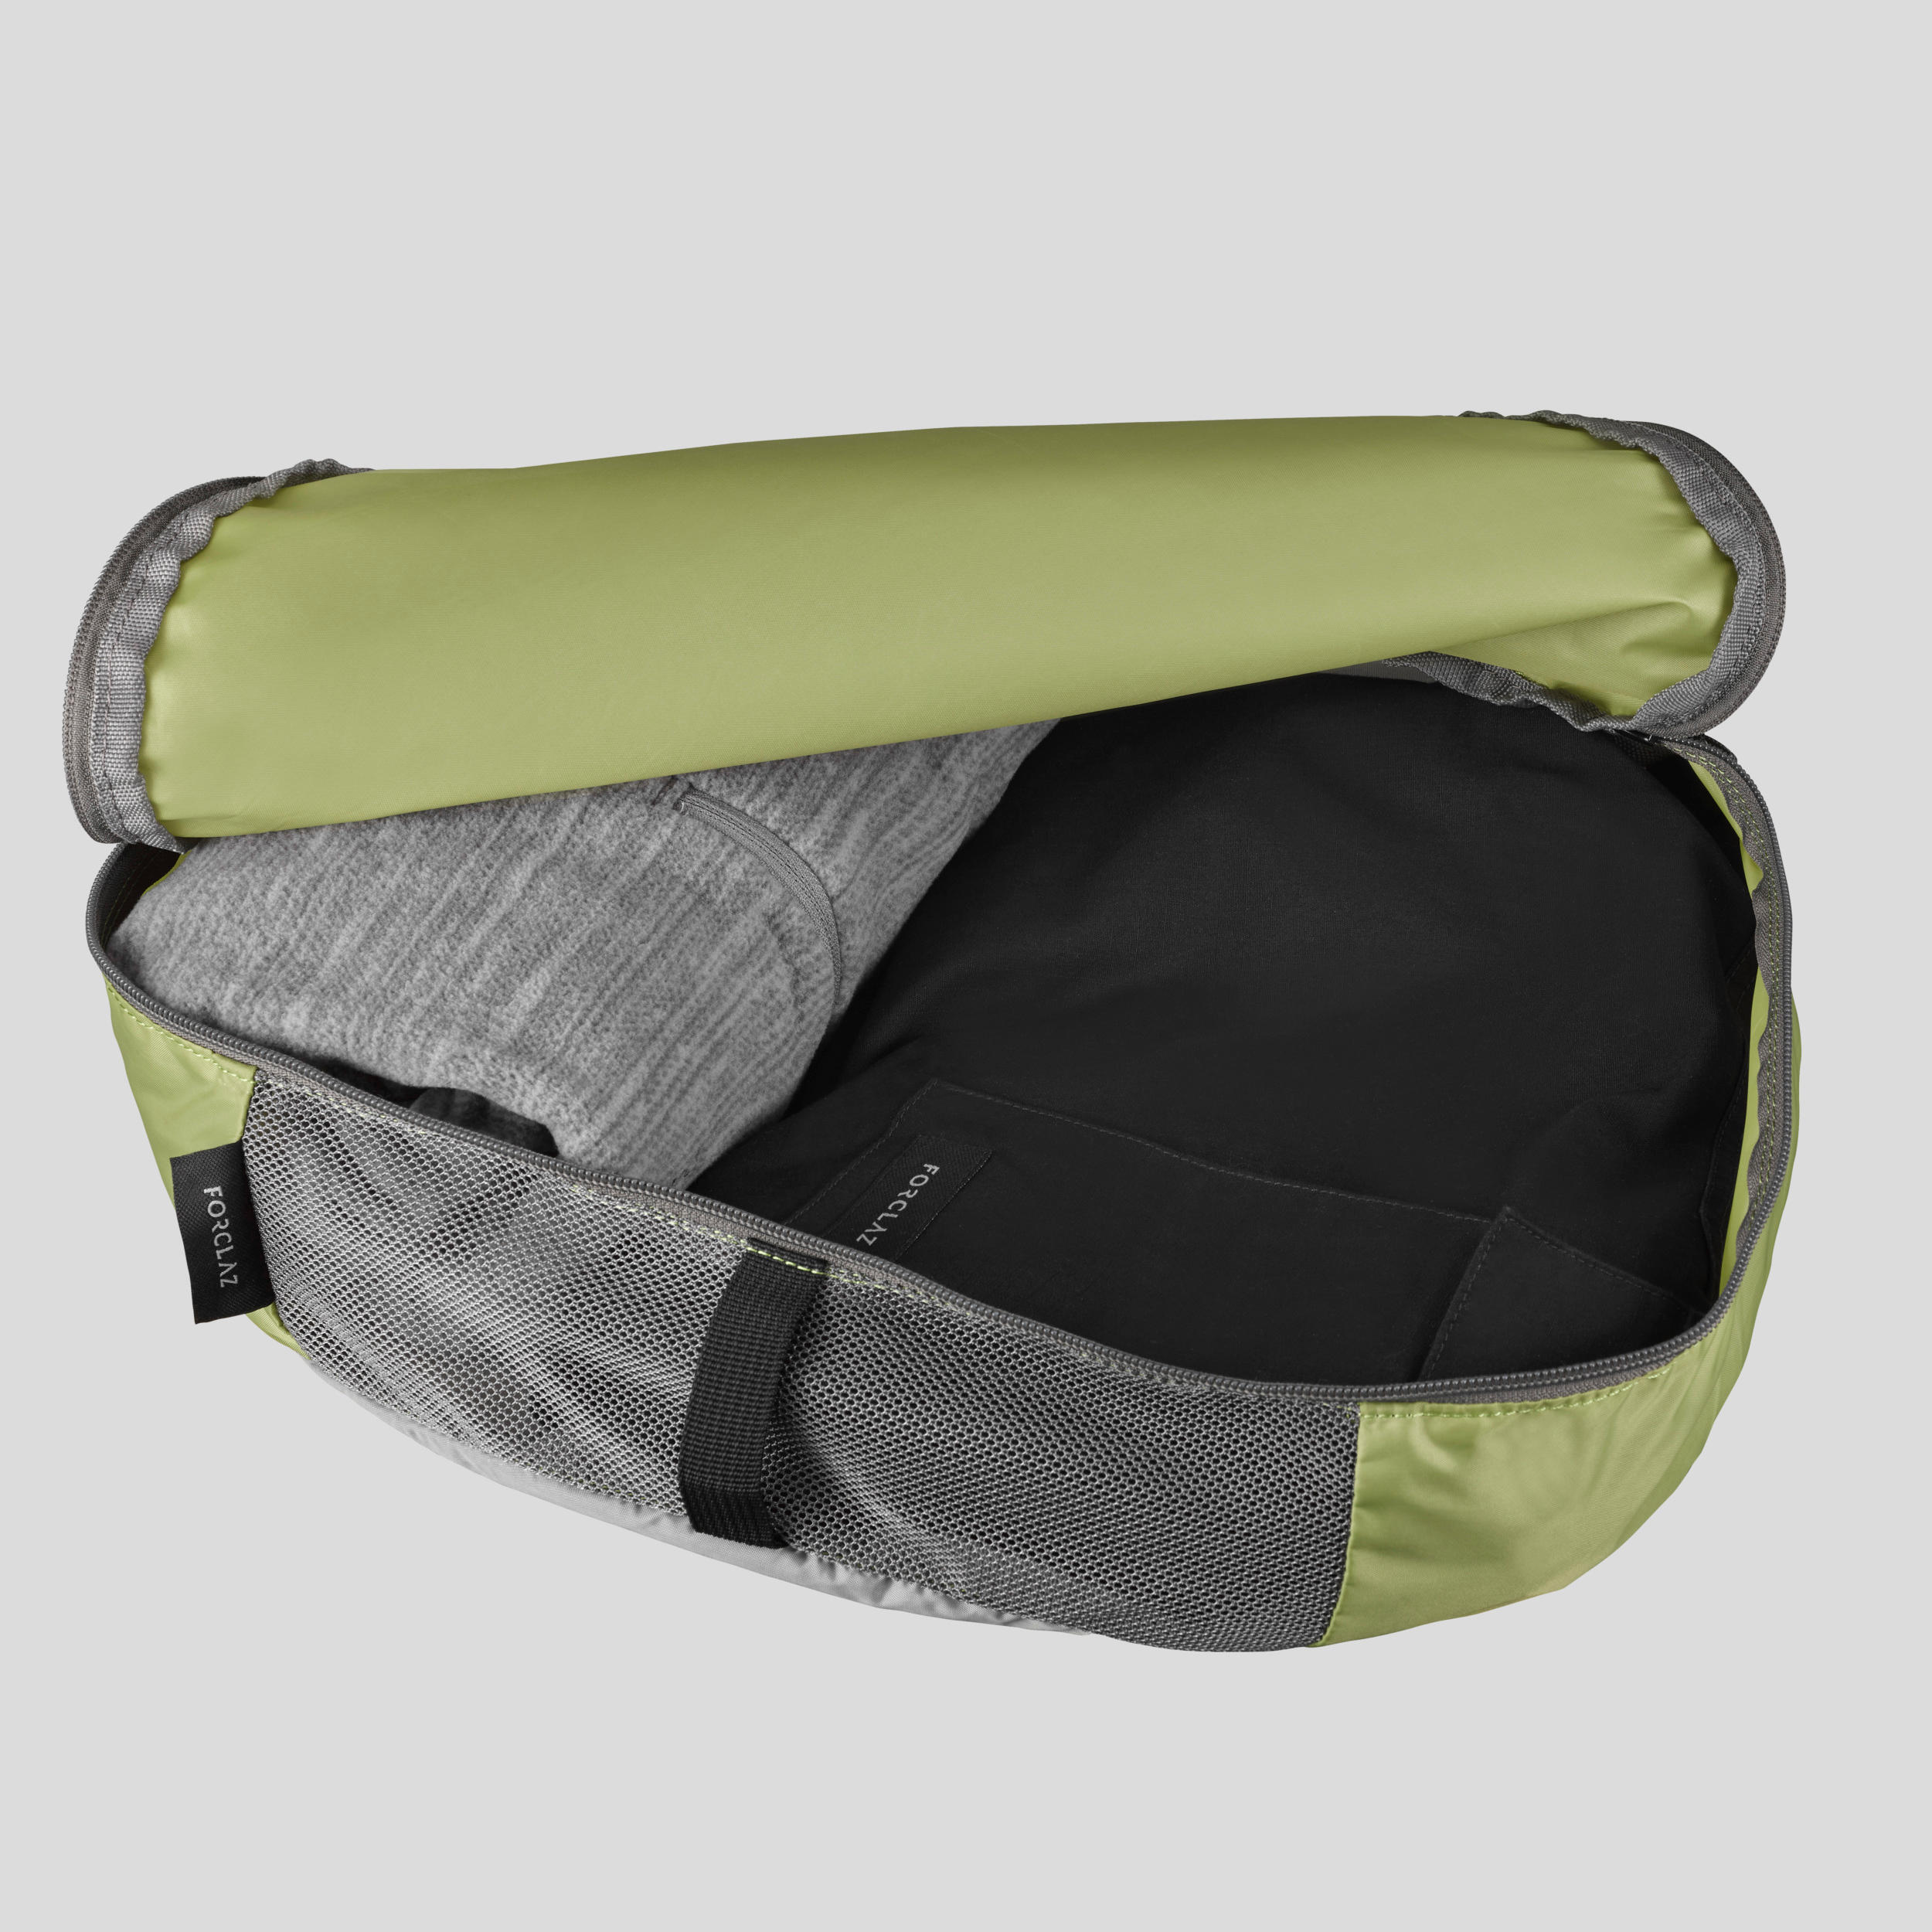 2 Half-Moon Bags For 70-90 L Backpacks 2/3